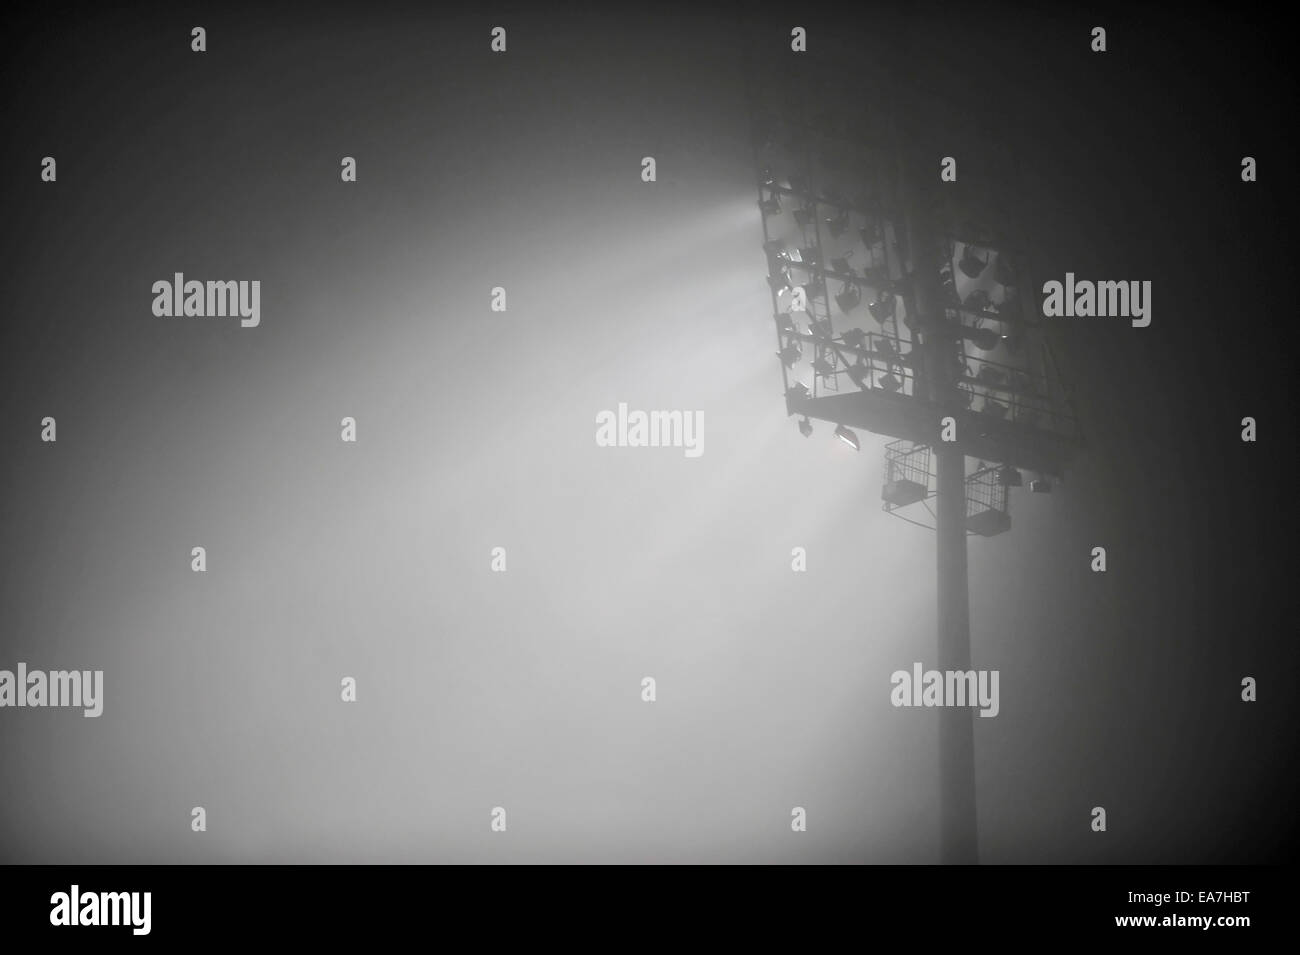 Football stadium floodlights are seen through dense fog in the night Stock Photo